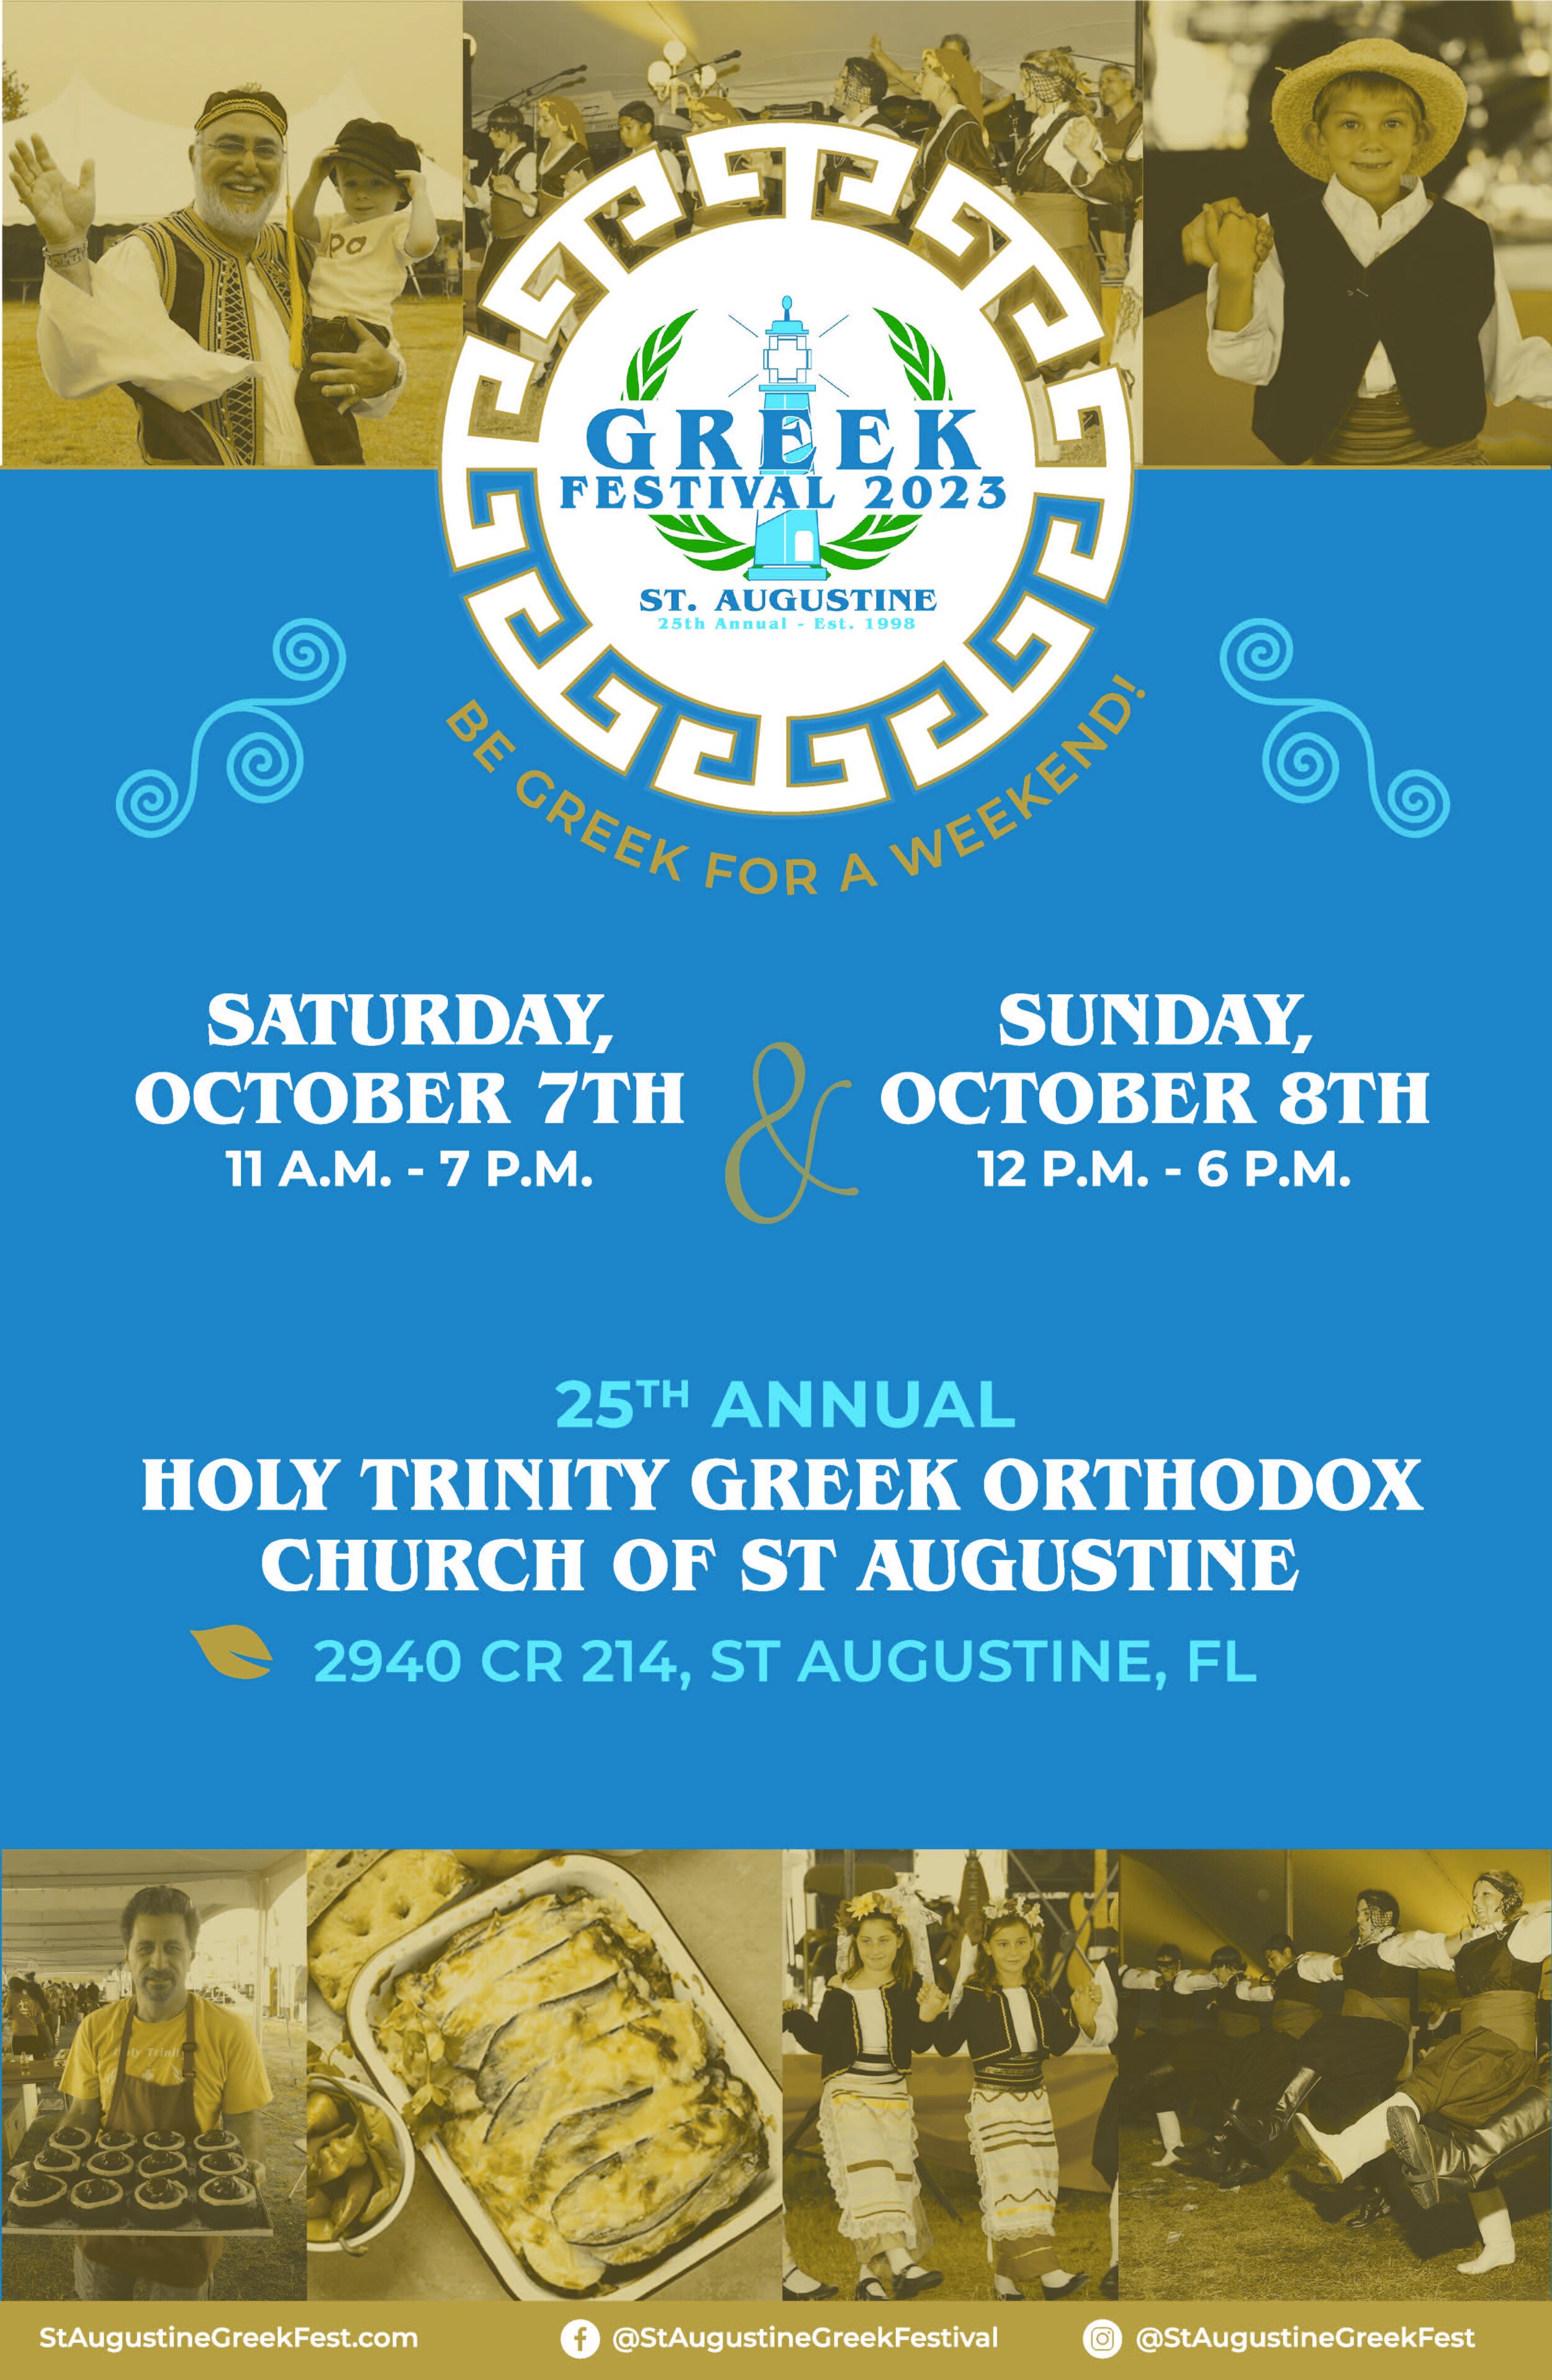 St. Augustine Greek Festival